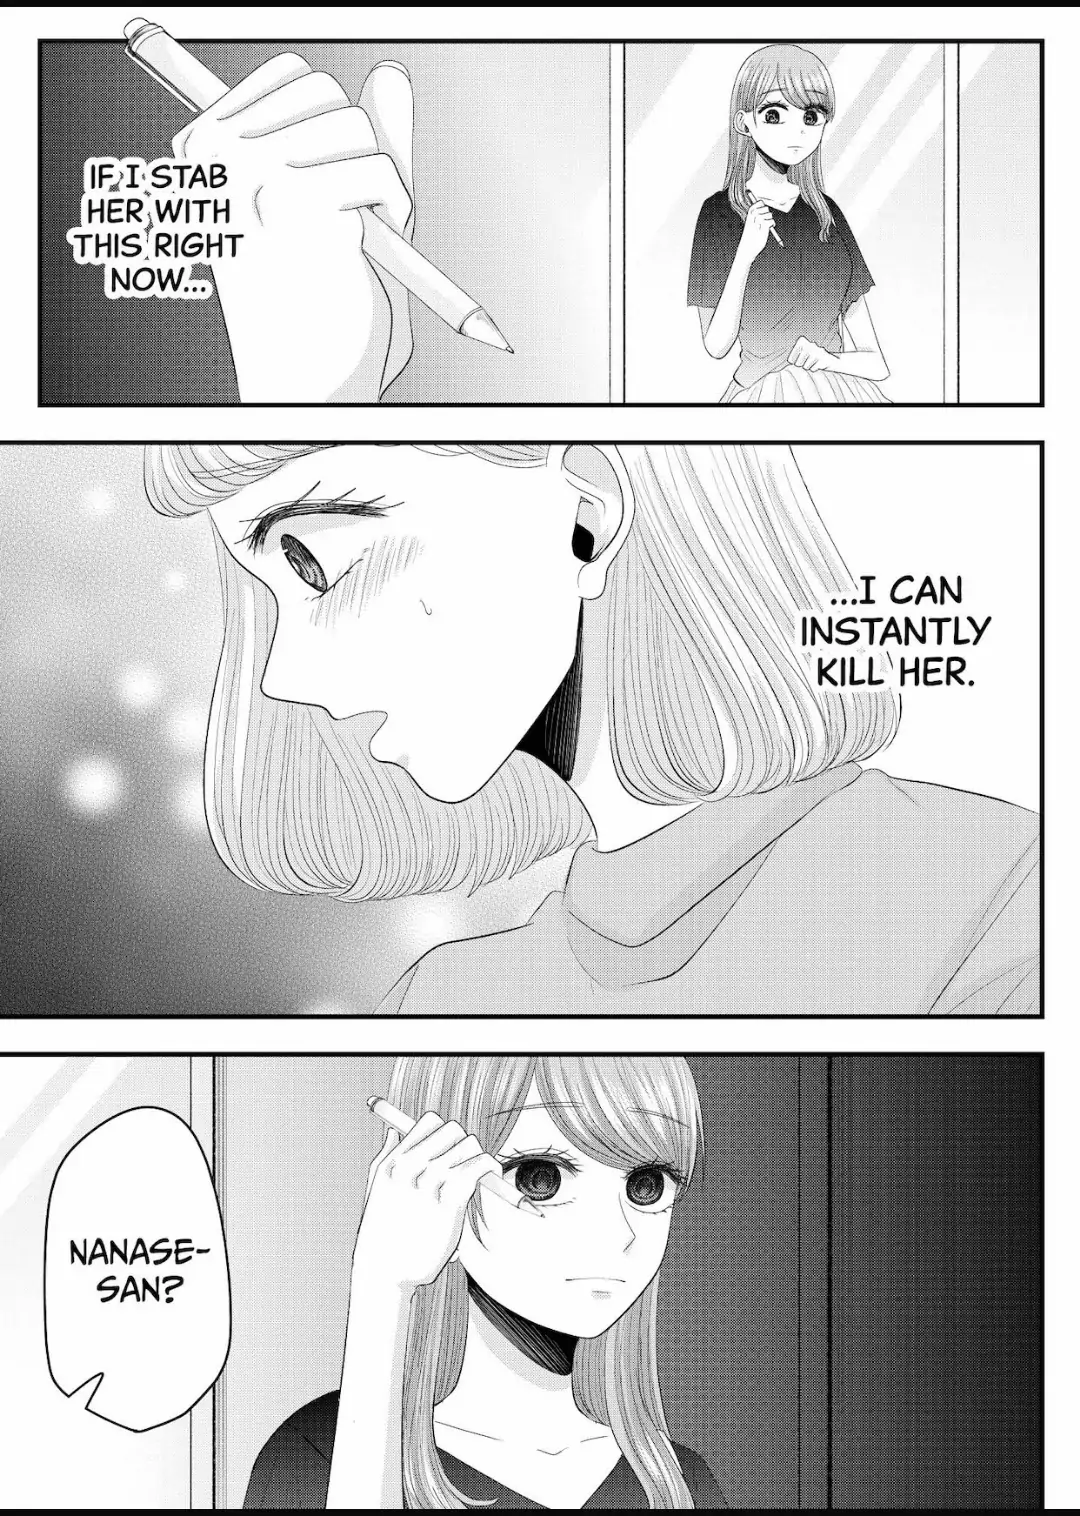 Nanase-San's Crazy Love Obsession - Page 3